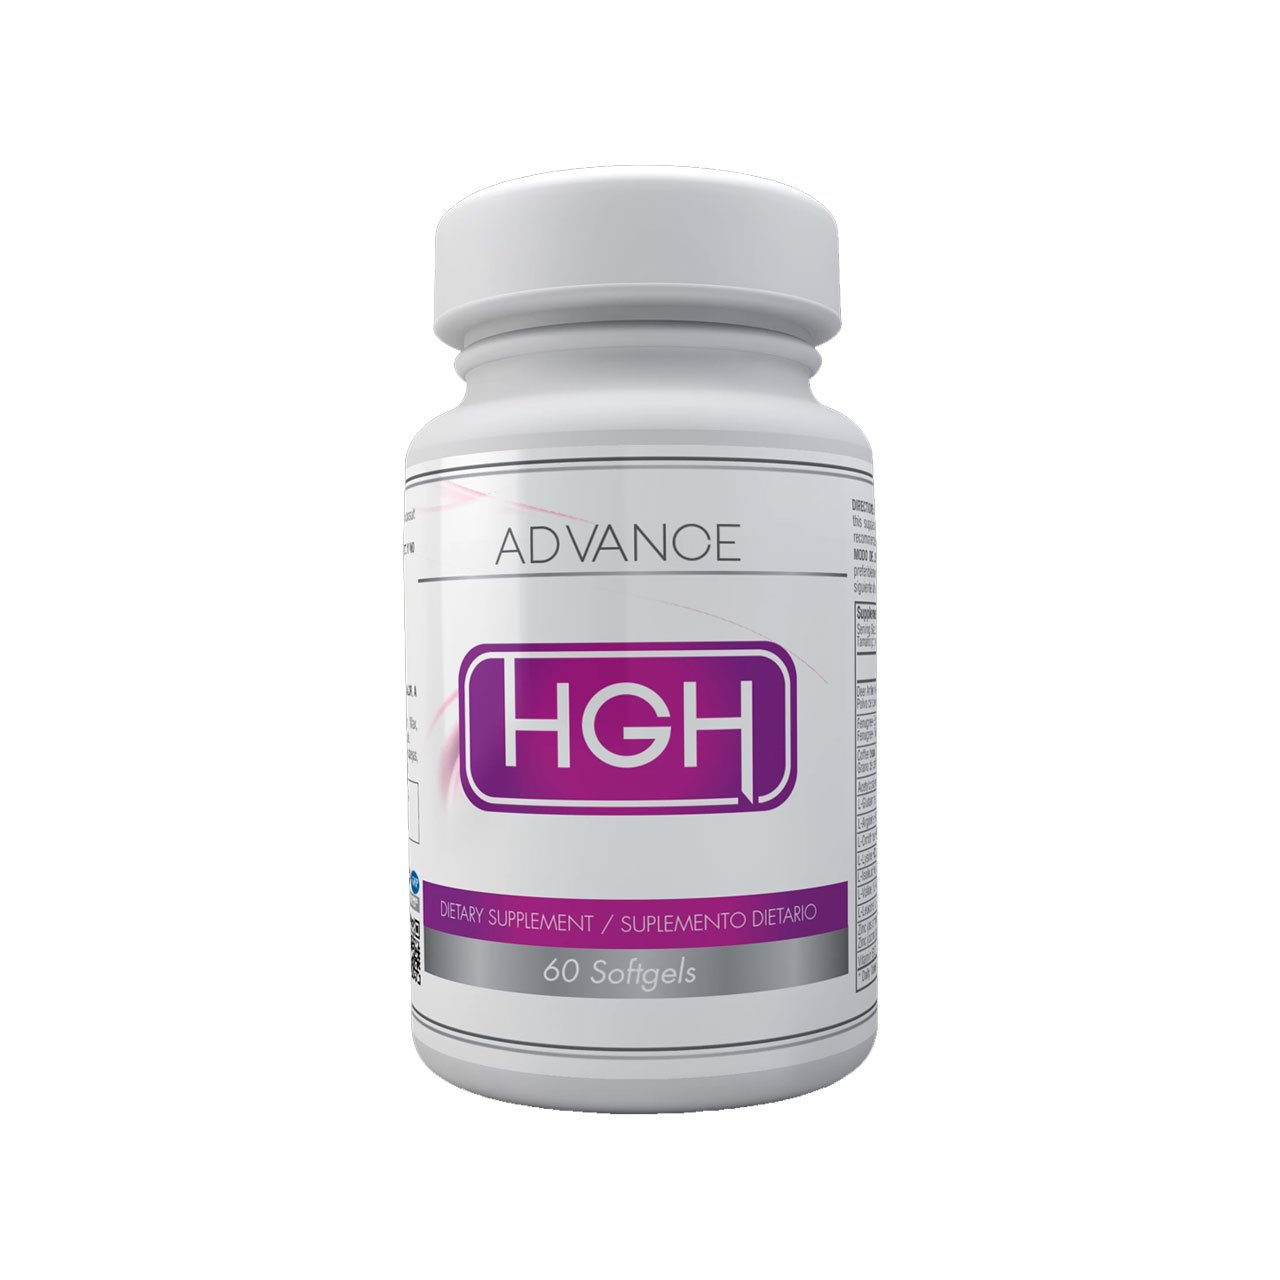 Advance HGH X 60 softgels - Healthy